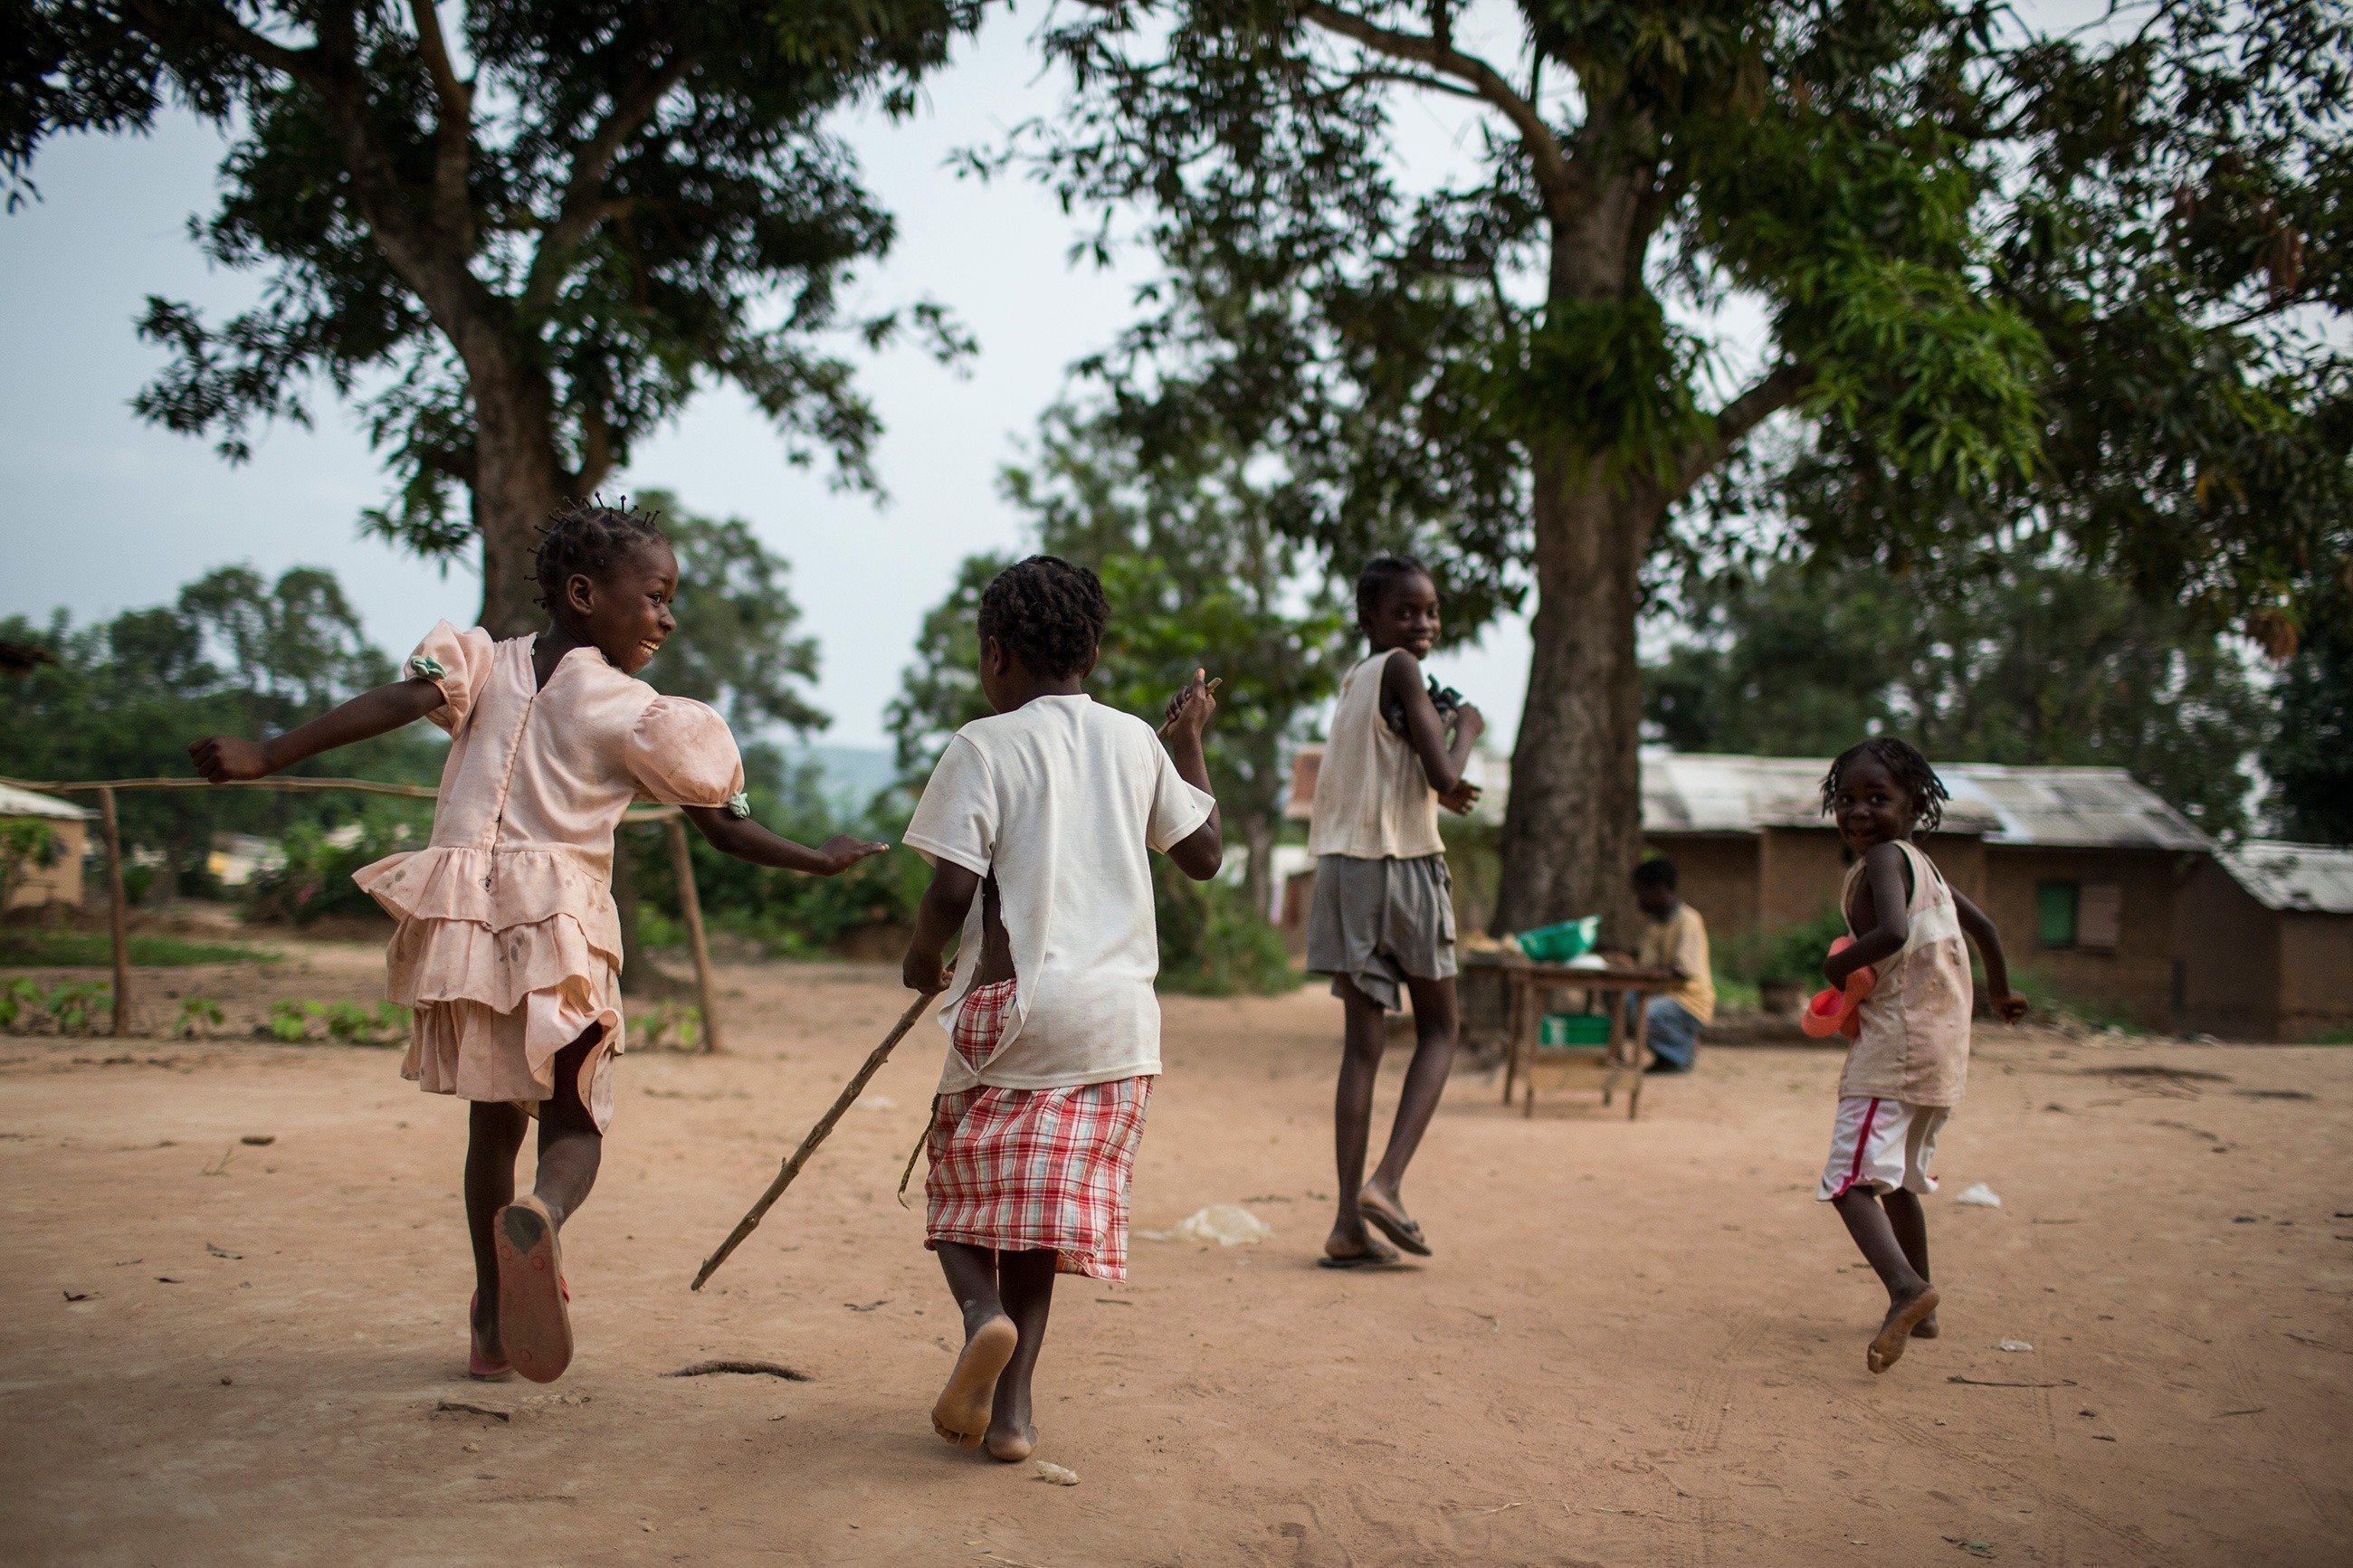 Afrikanische Kinder spielen fangen.